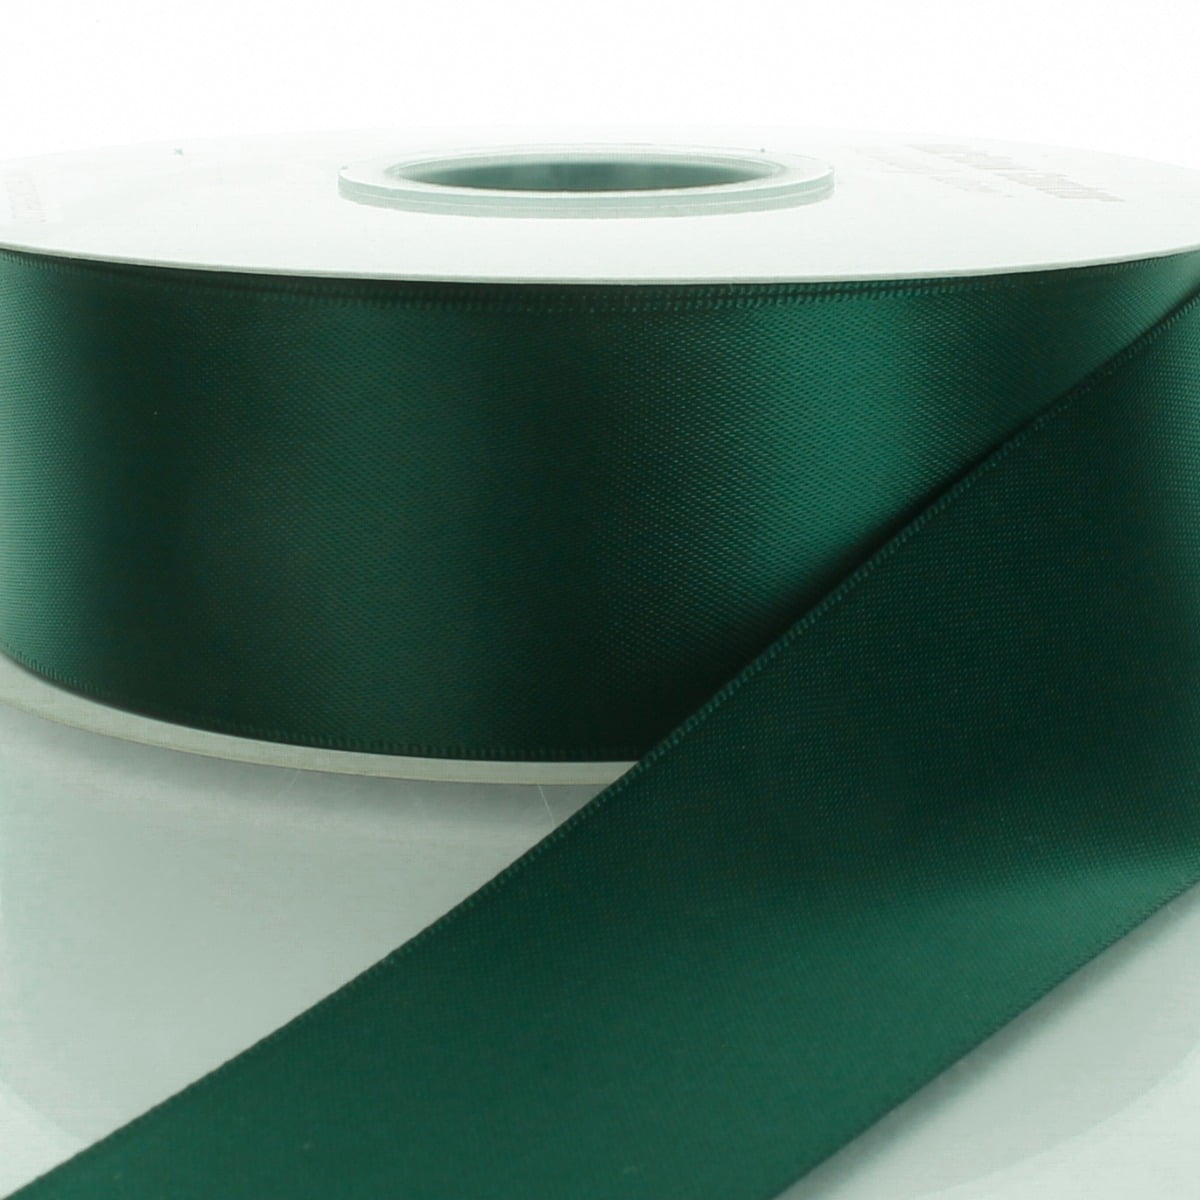 Green/Mint/Hunter Green Stripe Sheer Ribbon, 1.5 x 25 yards